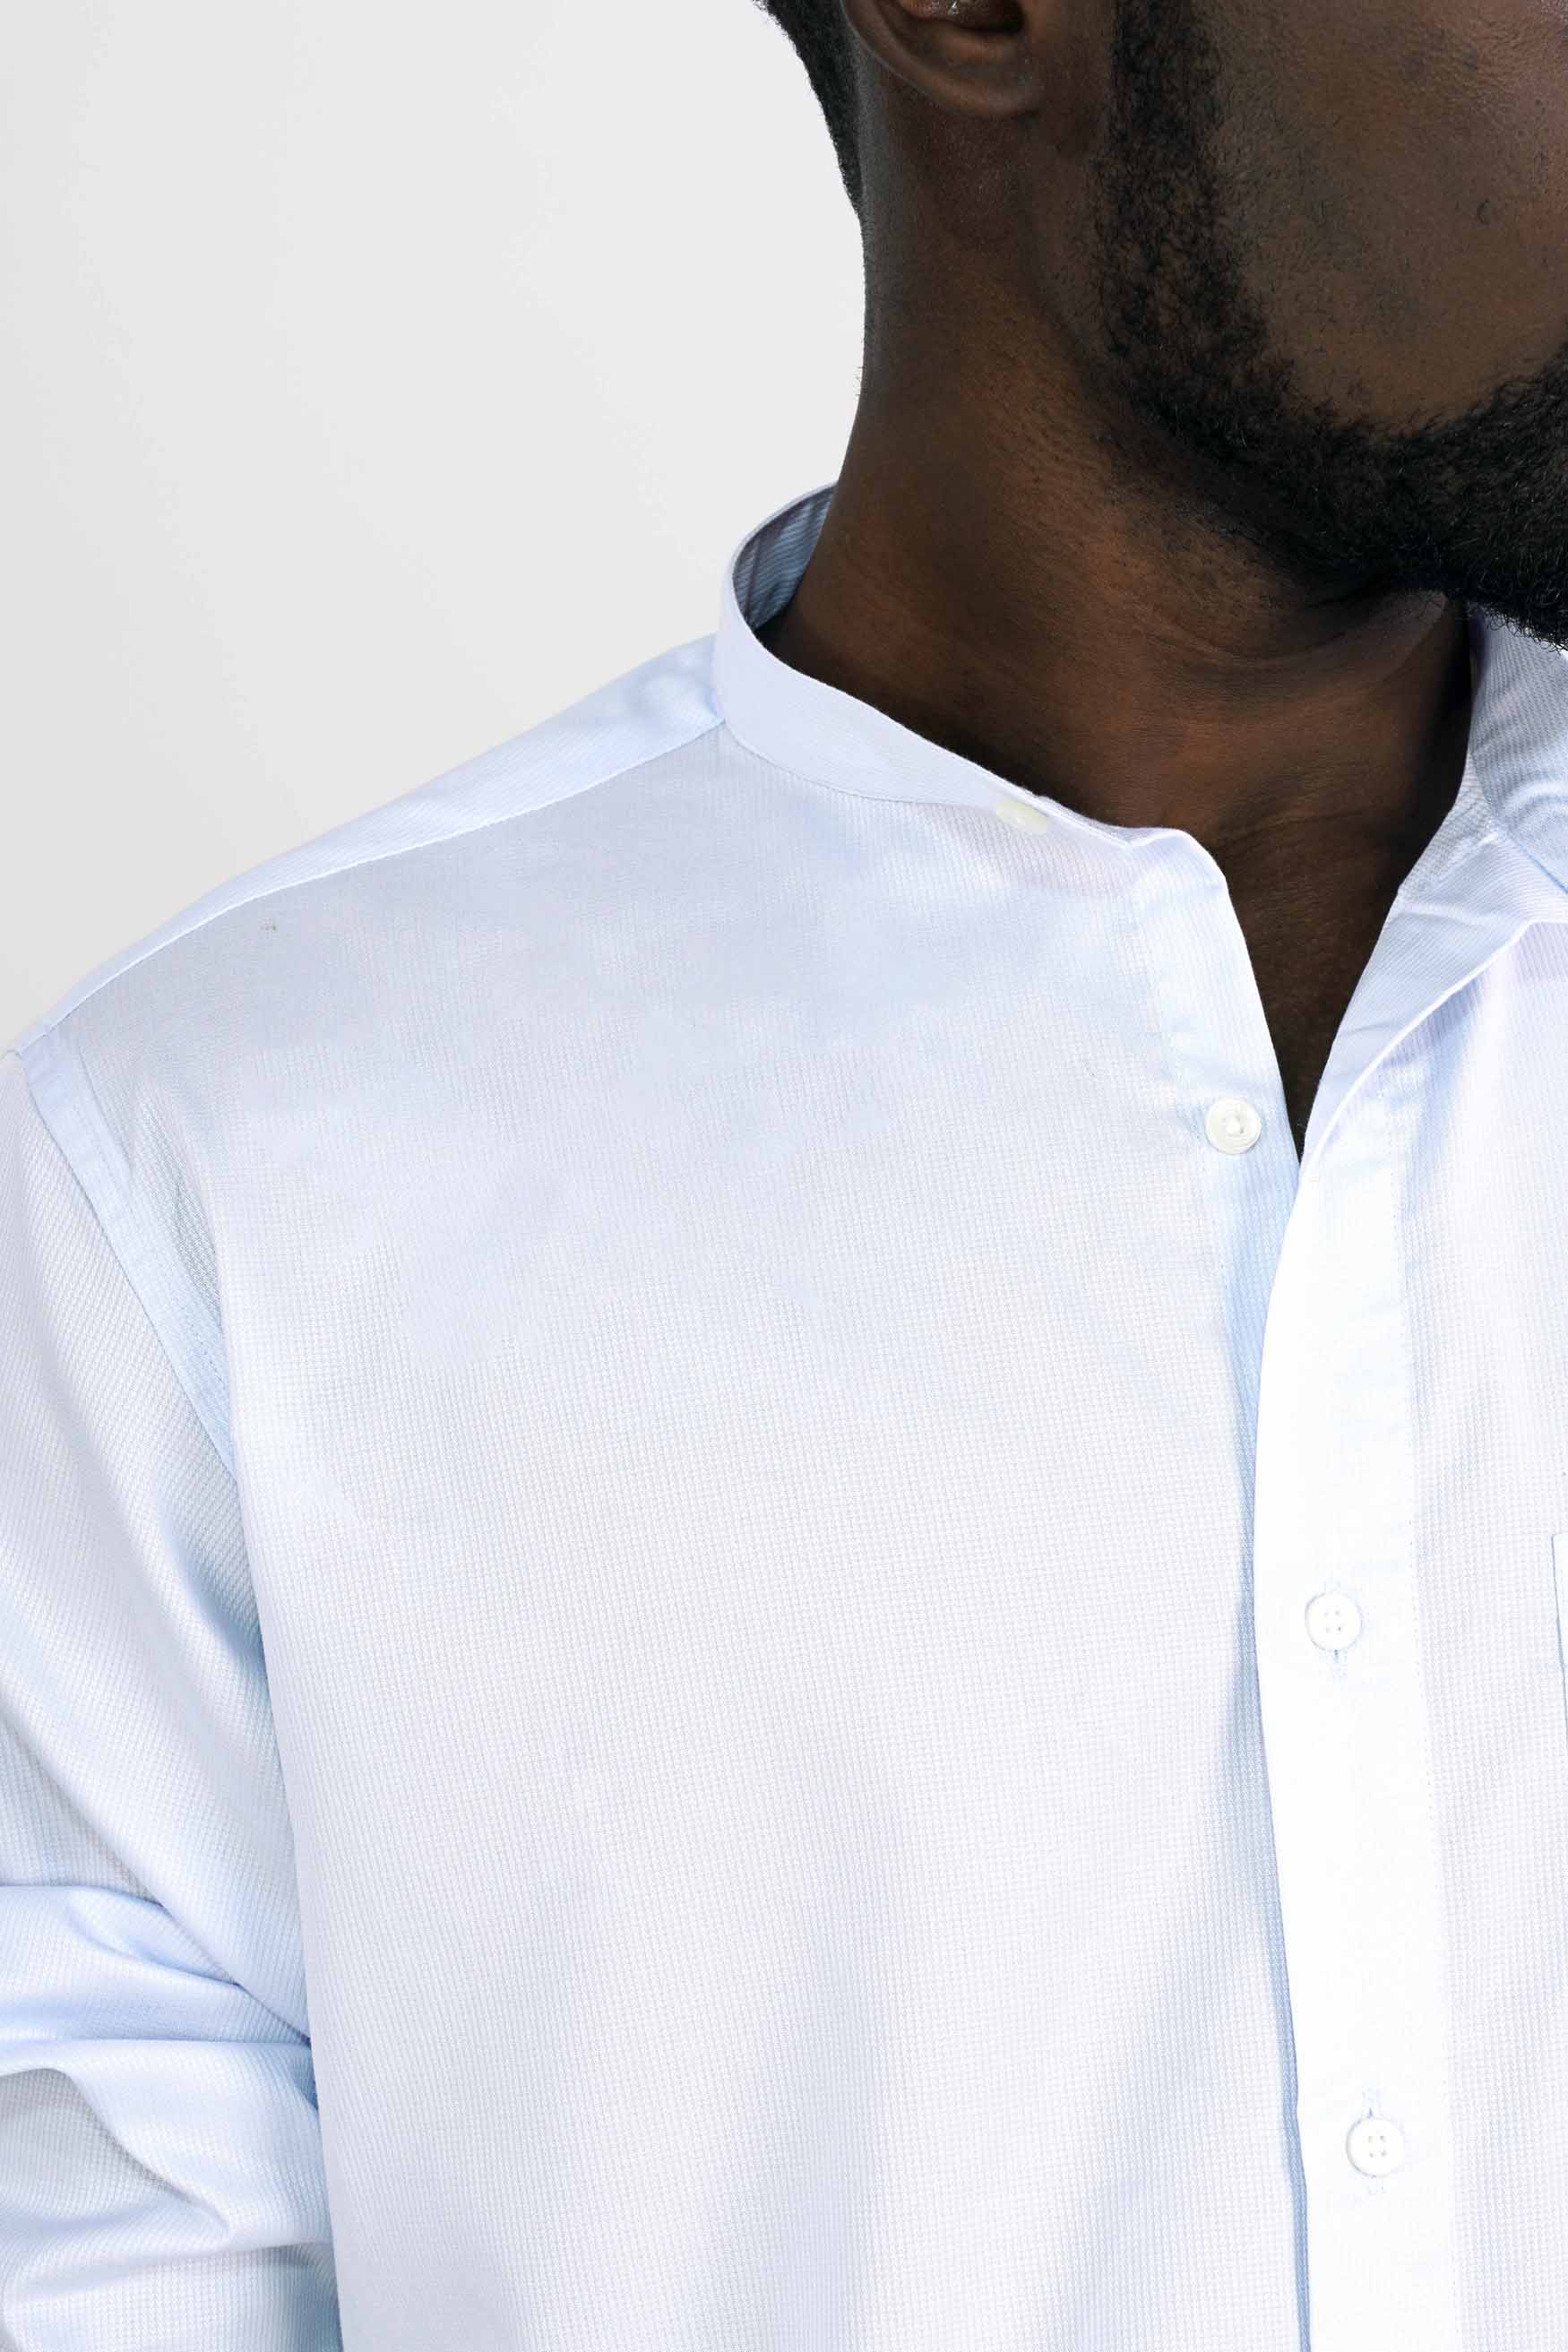 Aqua Blue Pin striped Dobby Textured Premium Giza Cotton Shirt